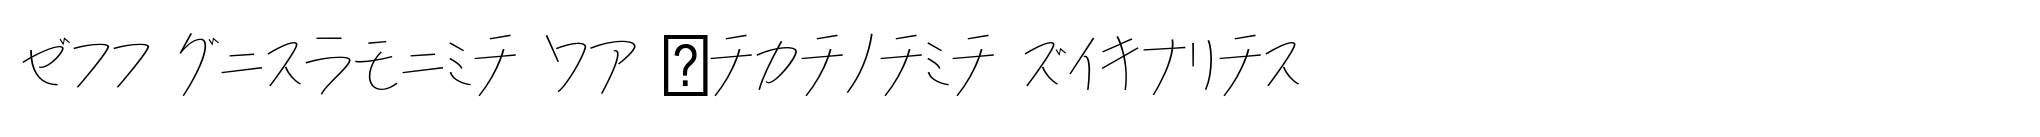 P22 Hiromina 03 Katakana Regular image